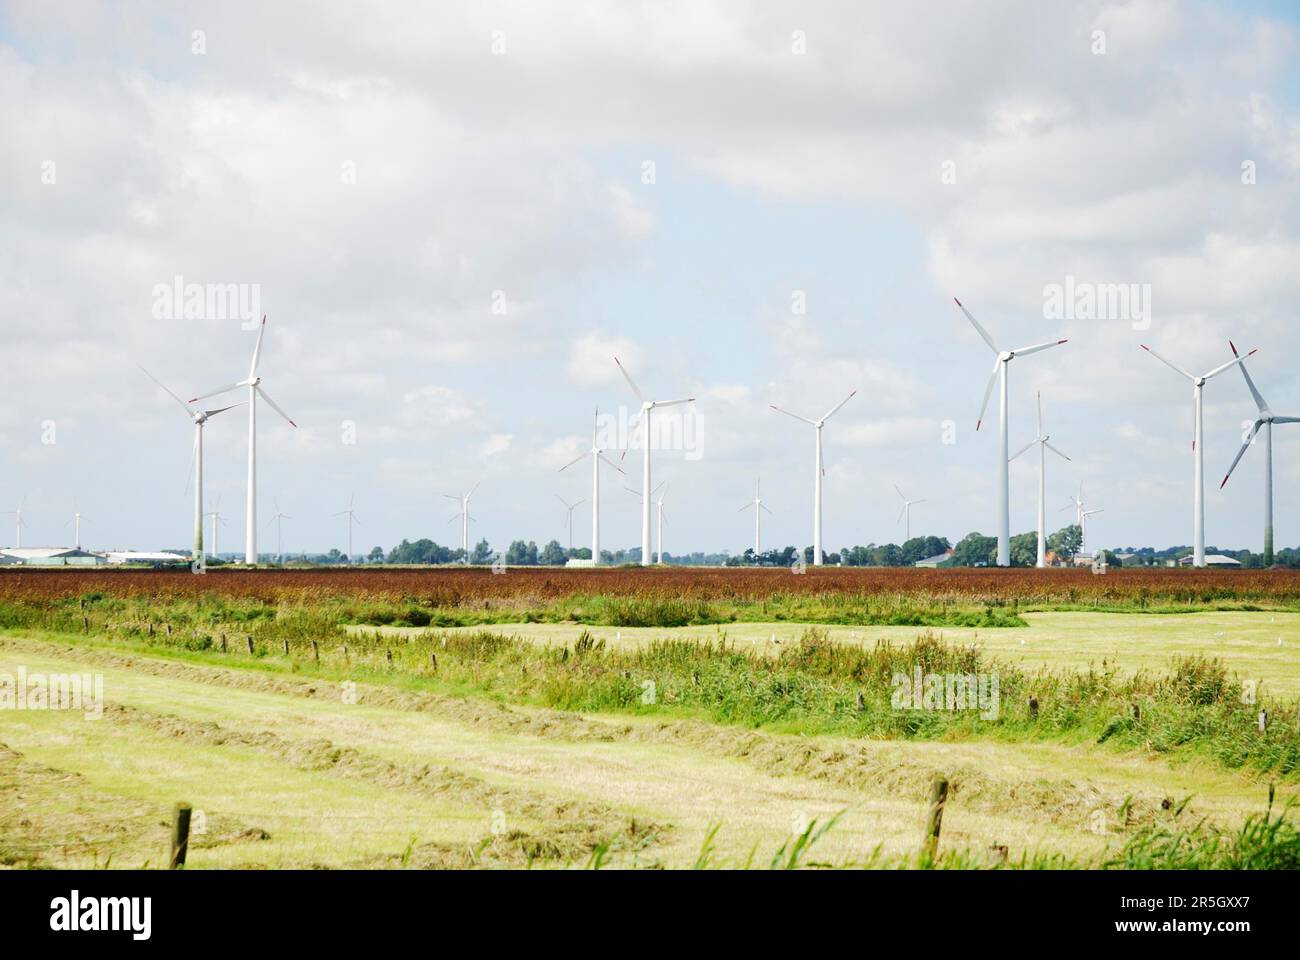 Alternative energy with wind power Stock Photo